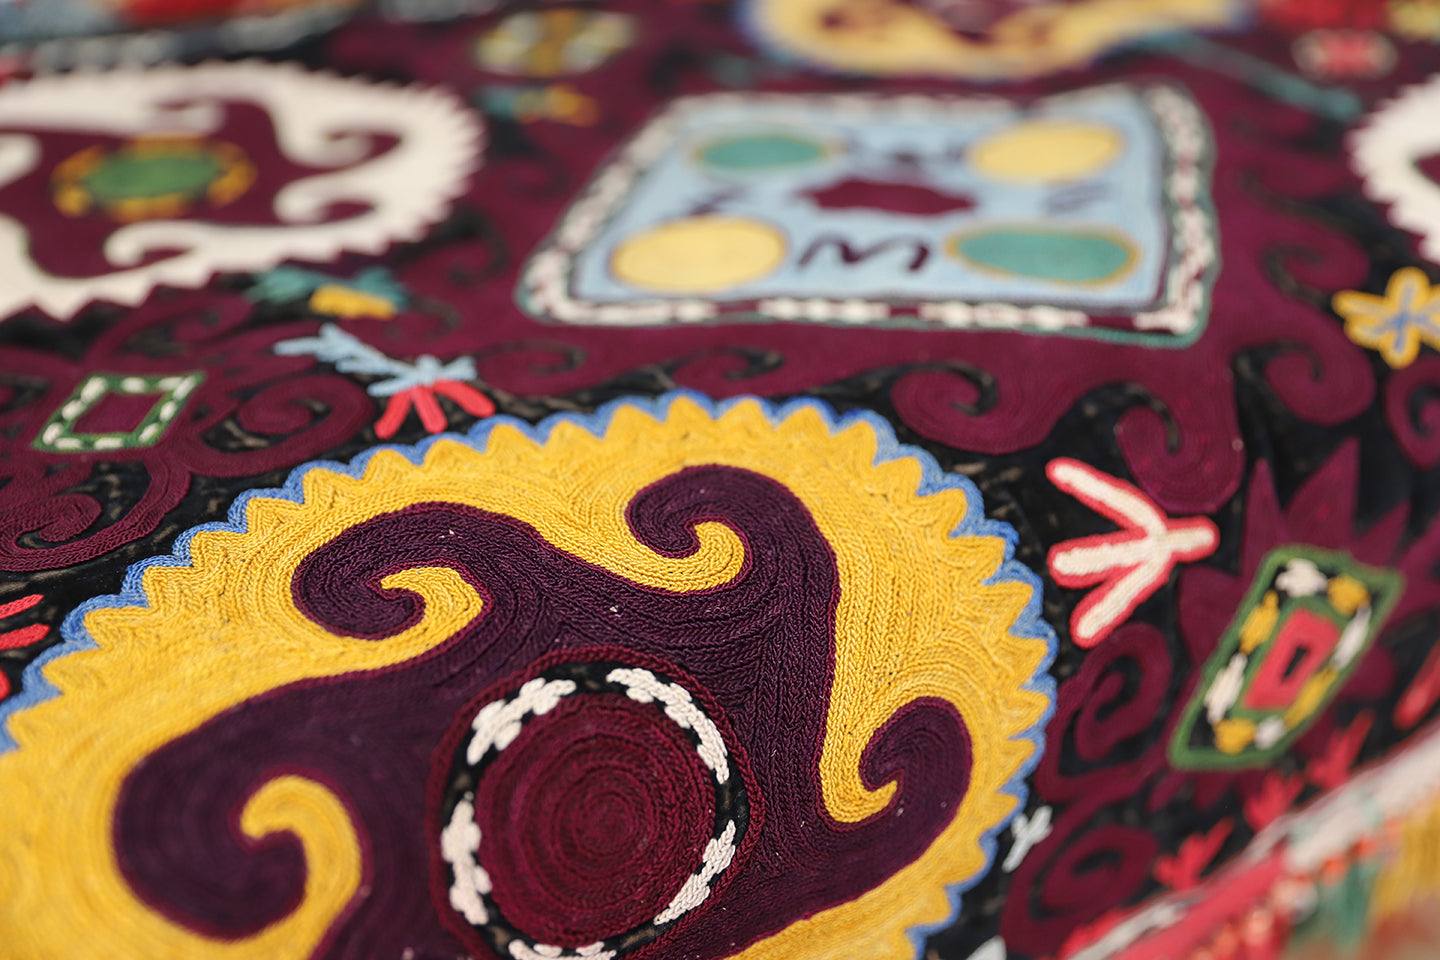 2'x2' Very Fine Antique Afghan Uzbek Laqai Home Decor Textile on Velvet